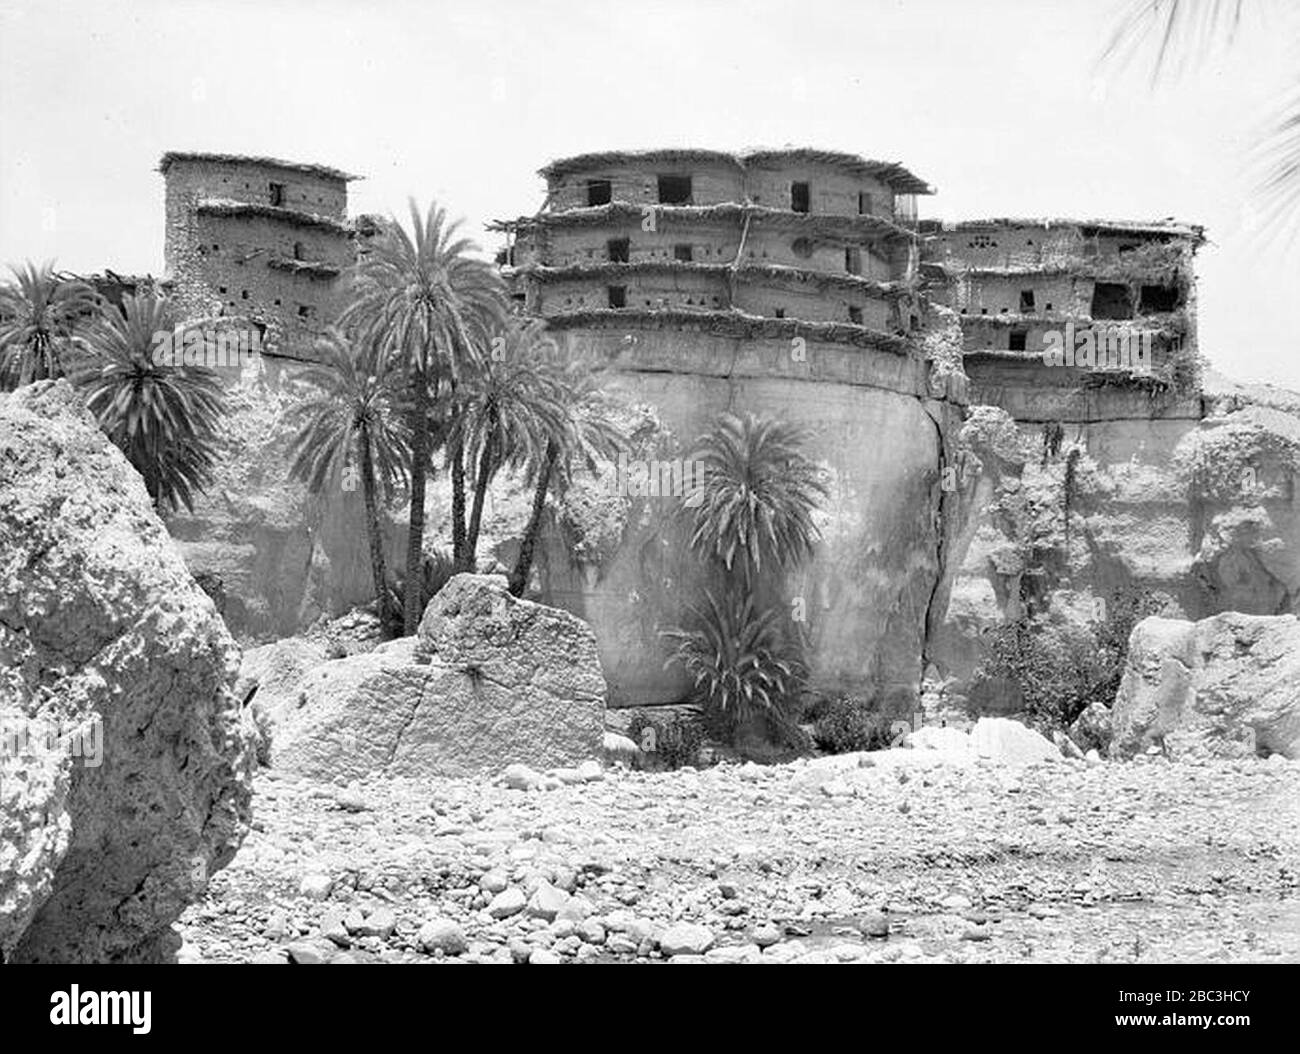 Guelaa à Baniane (Algérie) vers 1925 Georges-Louis Arlaud Stock Photo ...